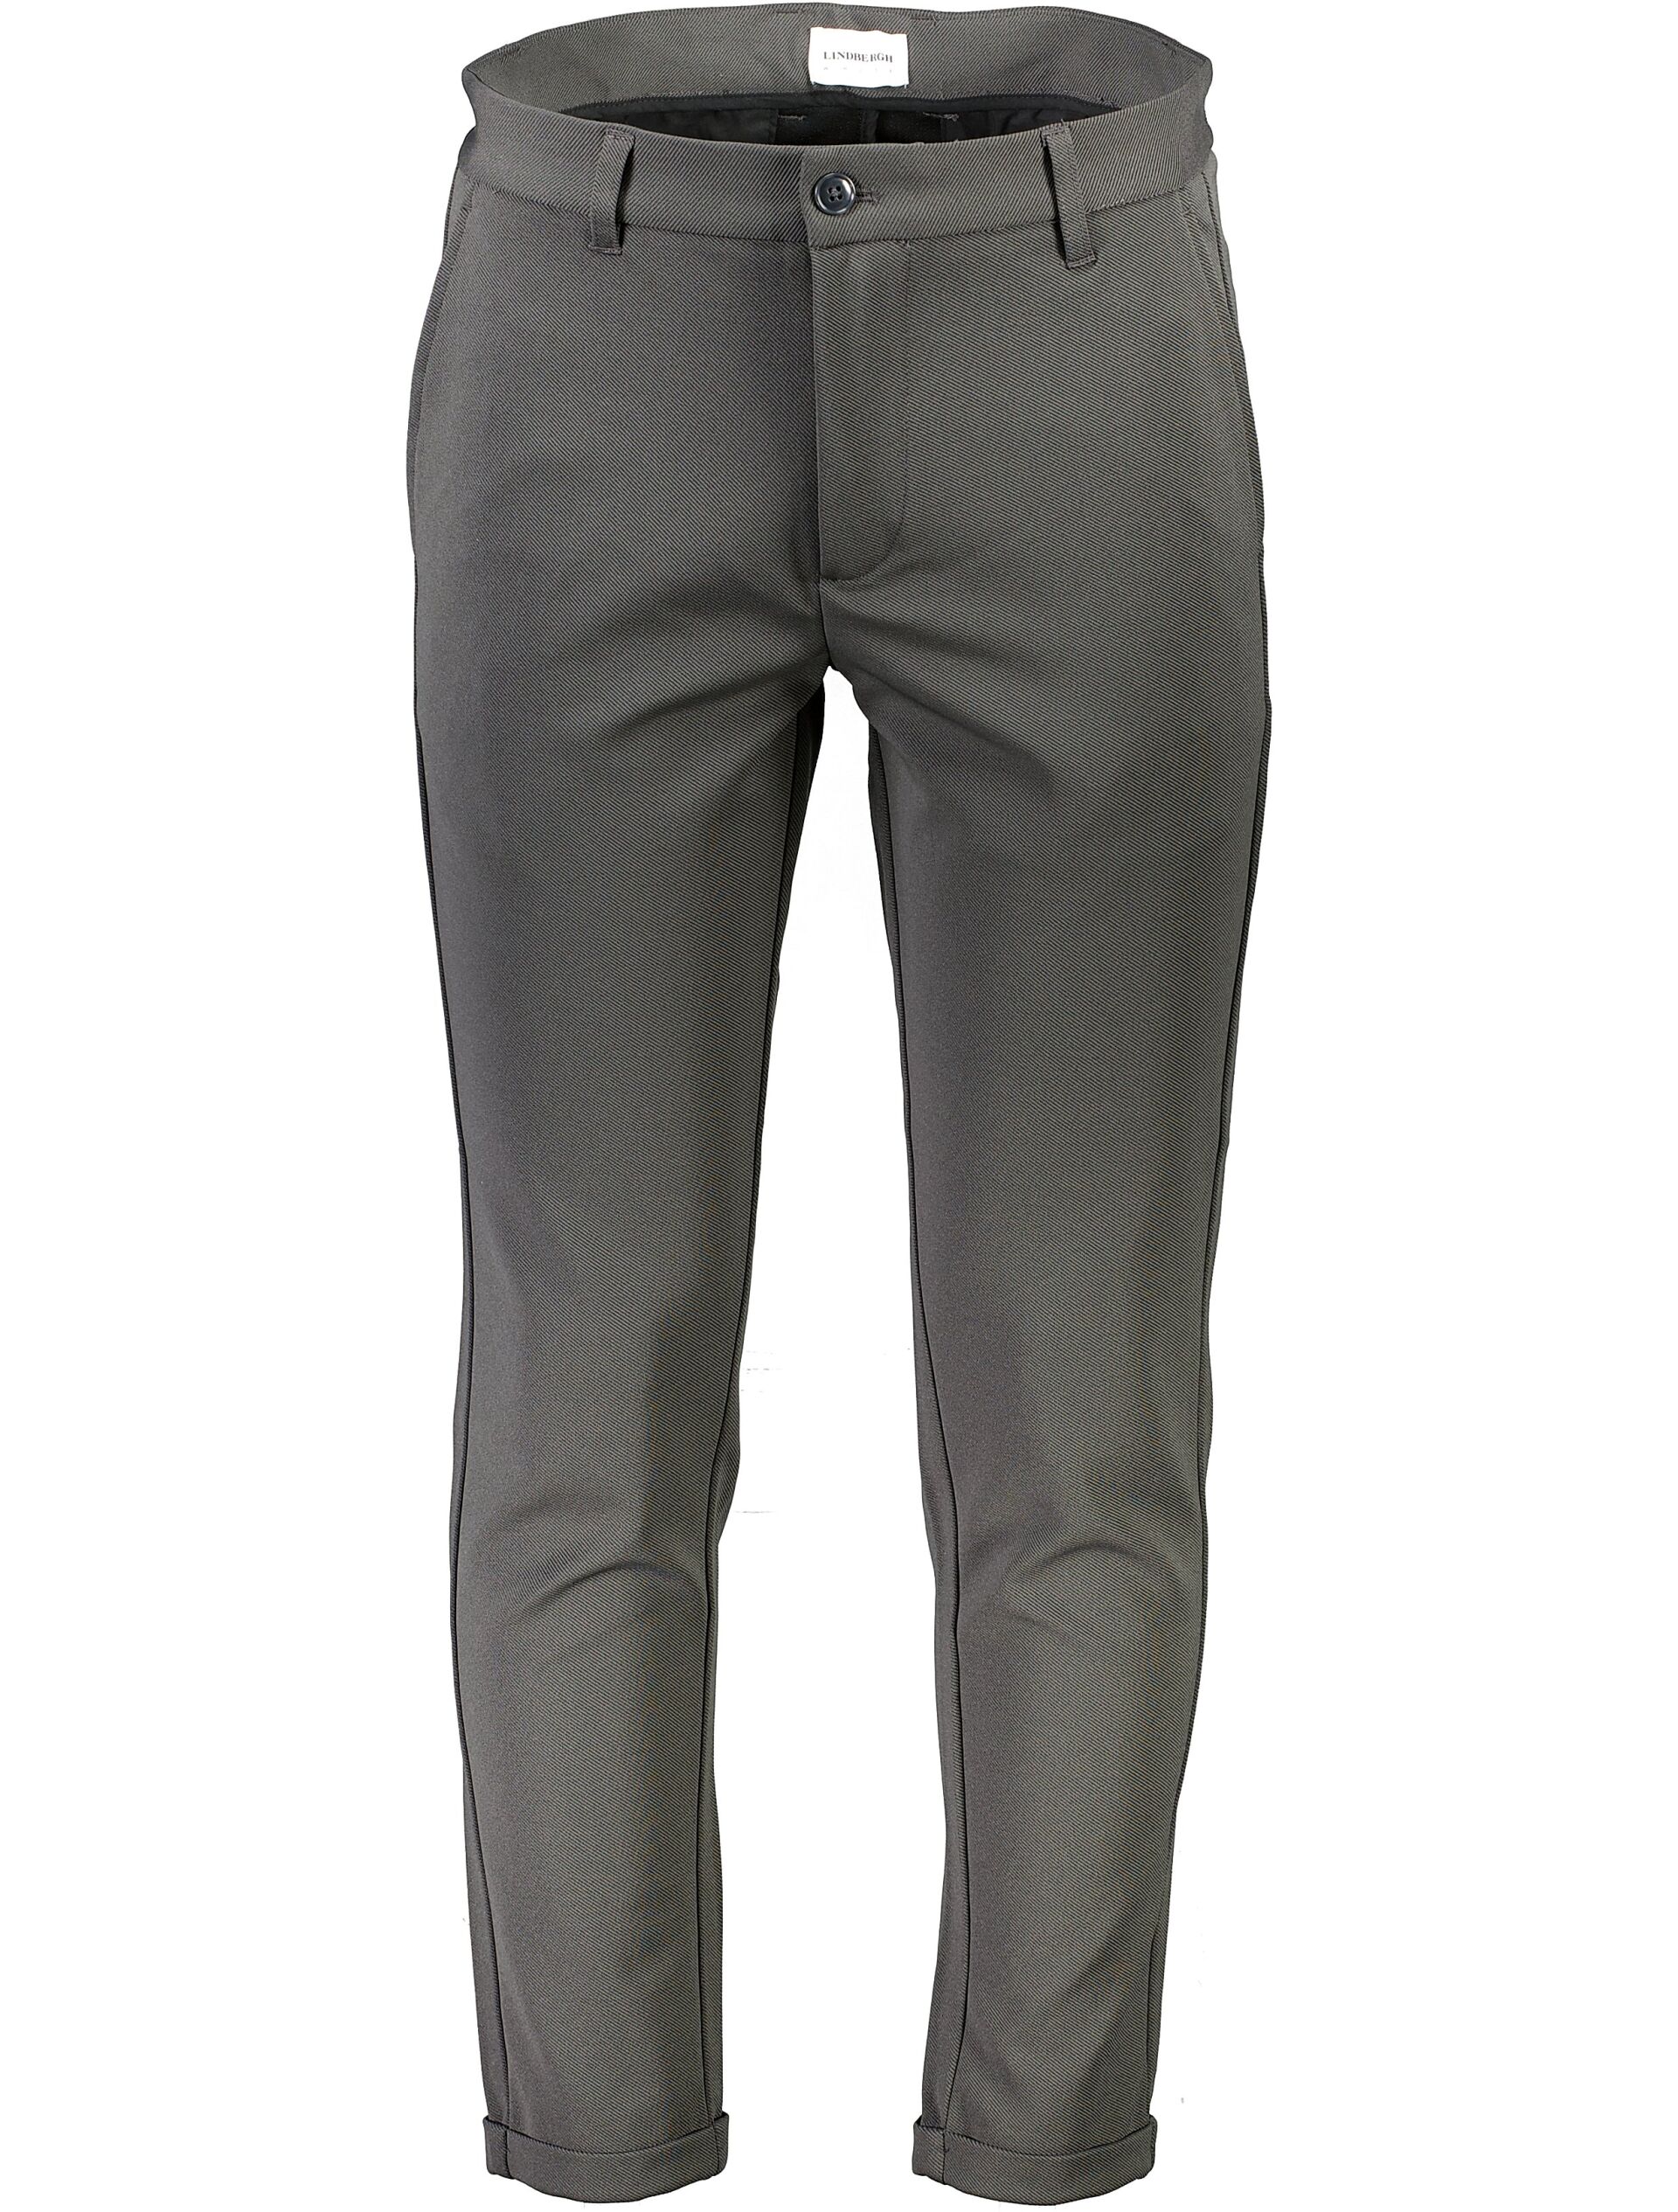 Performance pants Performance pants Grey 30-007035A